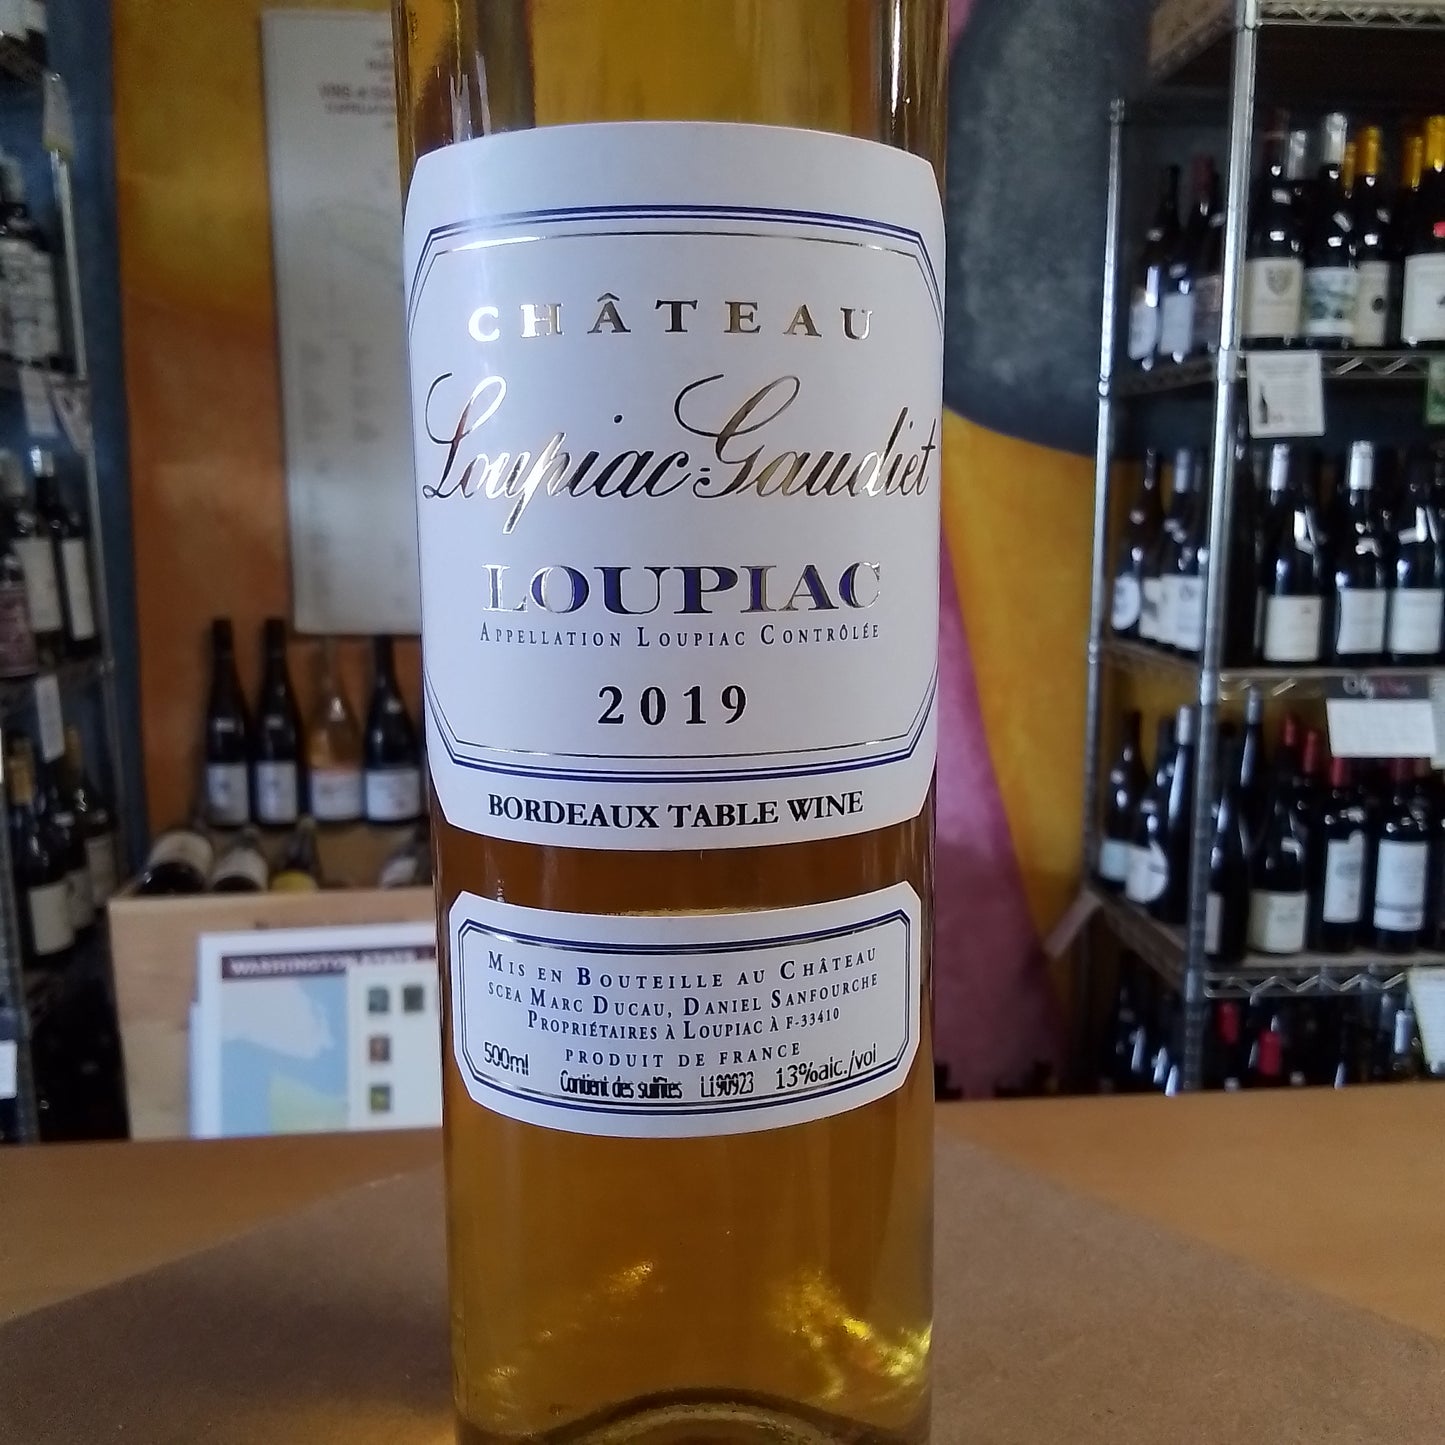 CHATEAU LOUPIAC-GAUDIET 2019 Sweet White Blend 'Loupiac' (Bordeaux, France)